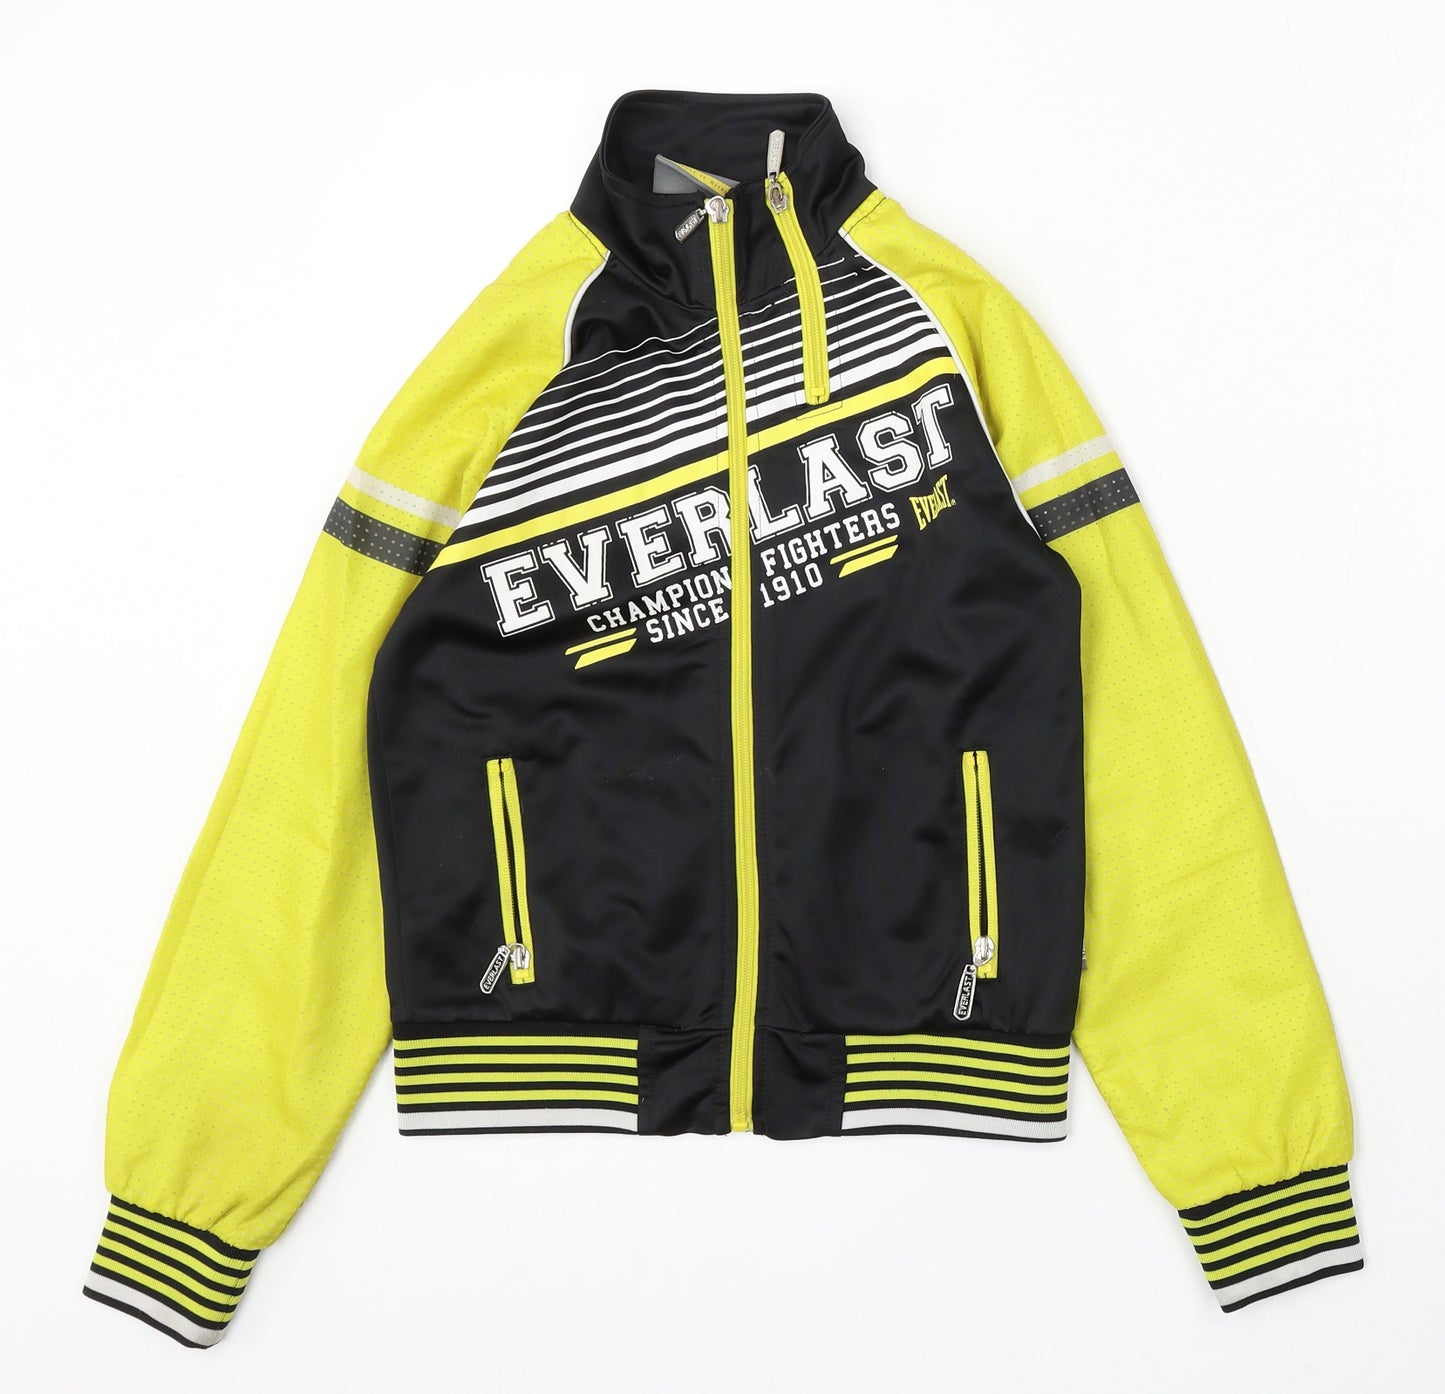 Everlast Boys Green Jacket Coat Size 9-10 Years Zip